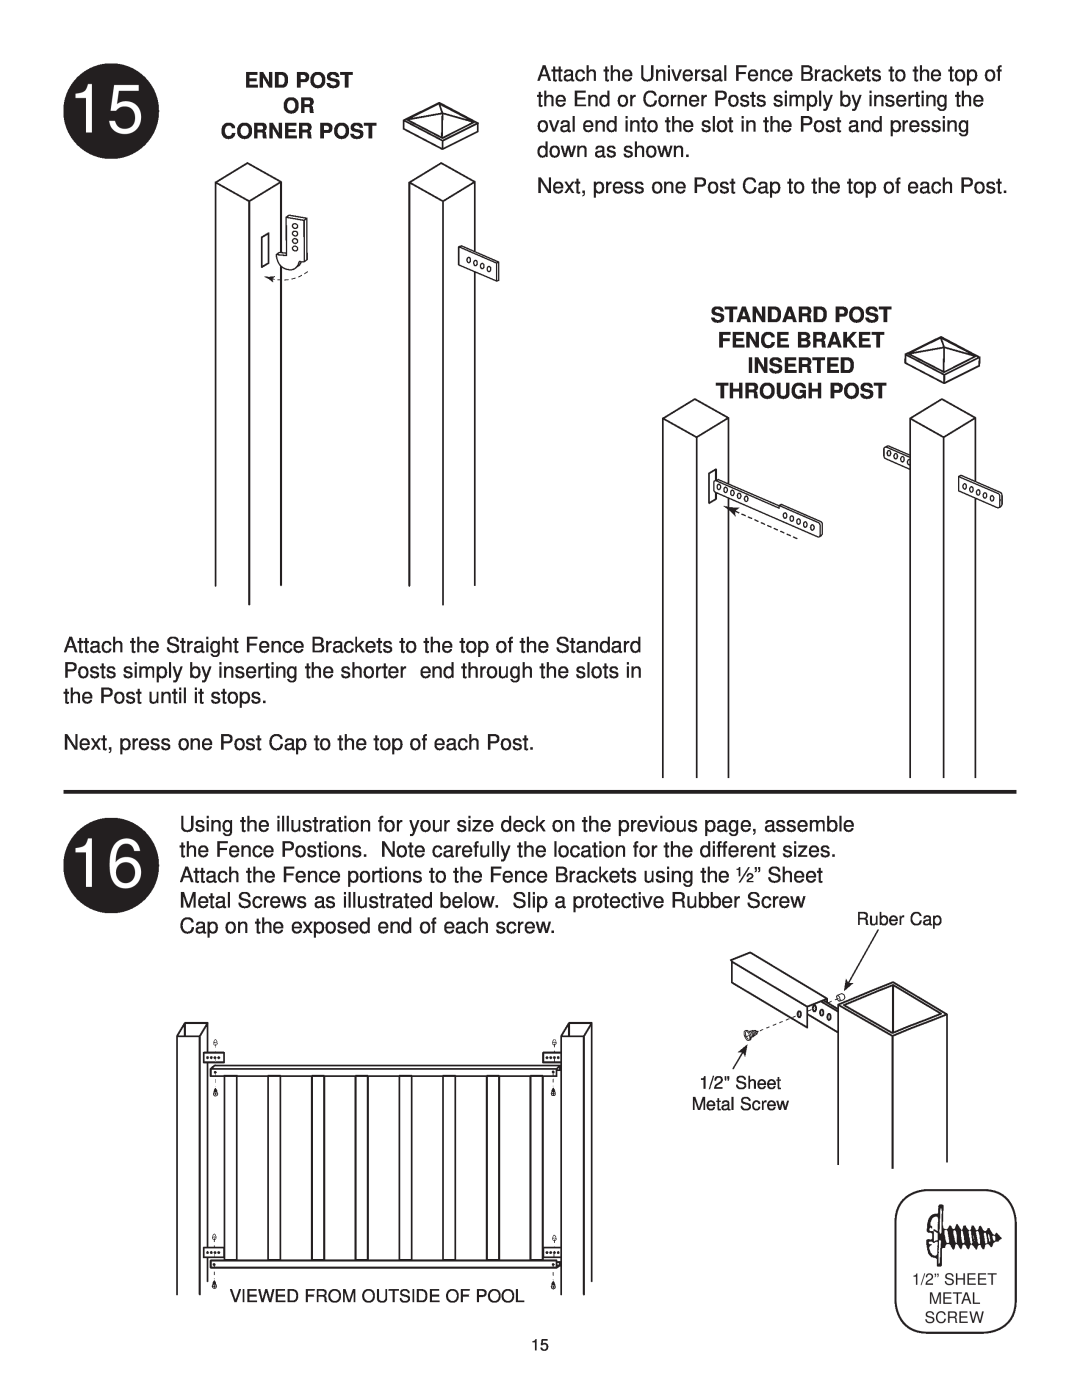 Swim'n Play side deck manual Standard Post Fence Braket Inserted Through Post, Ruber Cap, 1/2 Sheet Metal Screw 